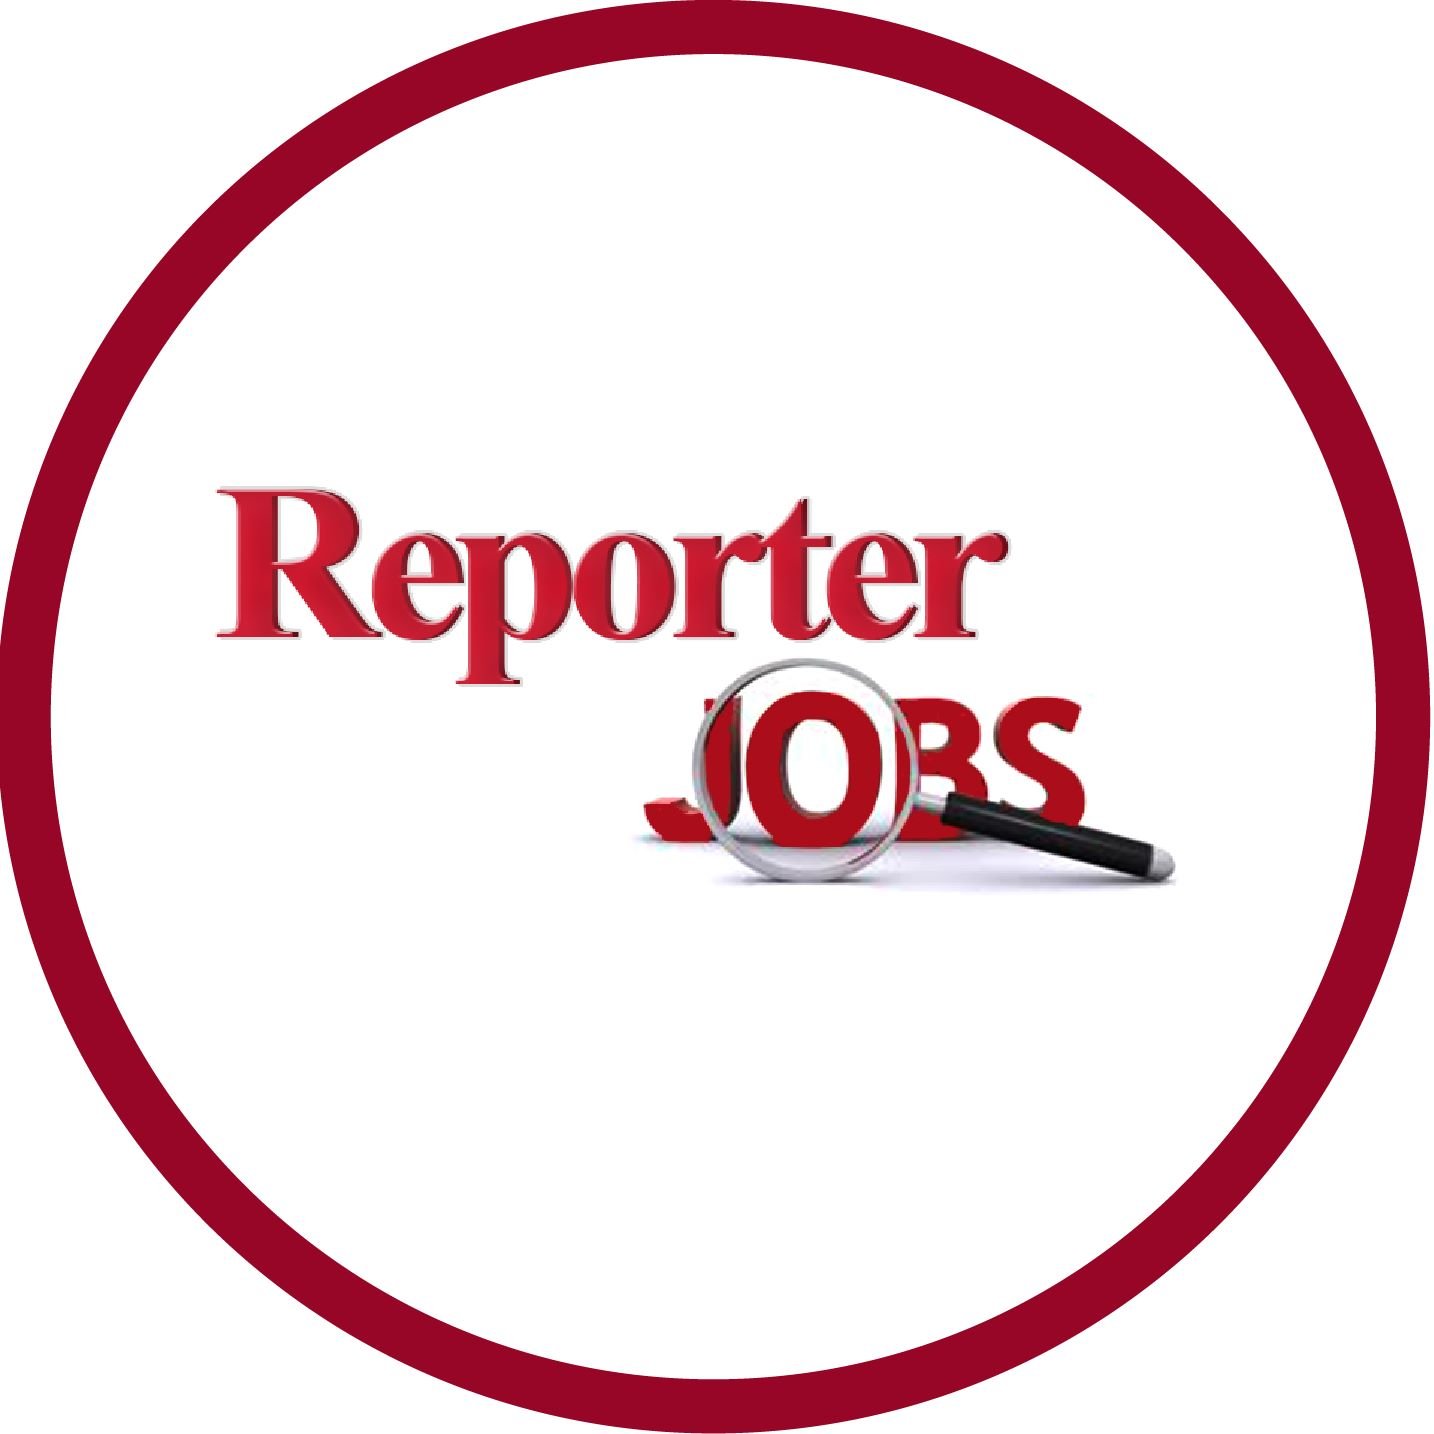 Ethiopian Reporter Jobs | The largest job portal in Ethiopia !